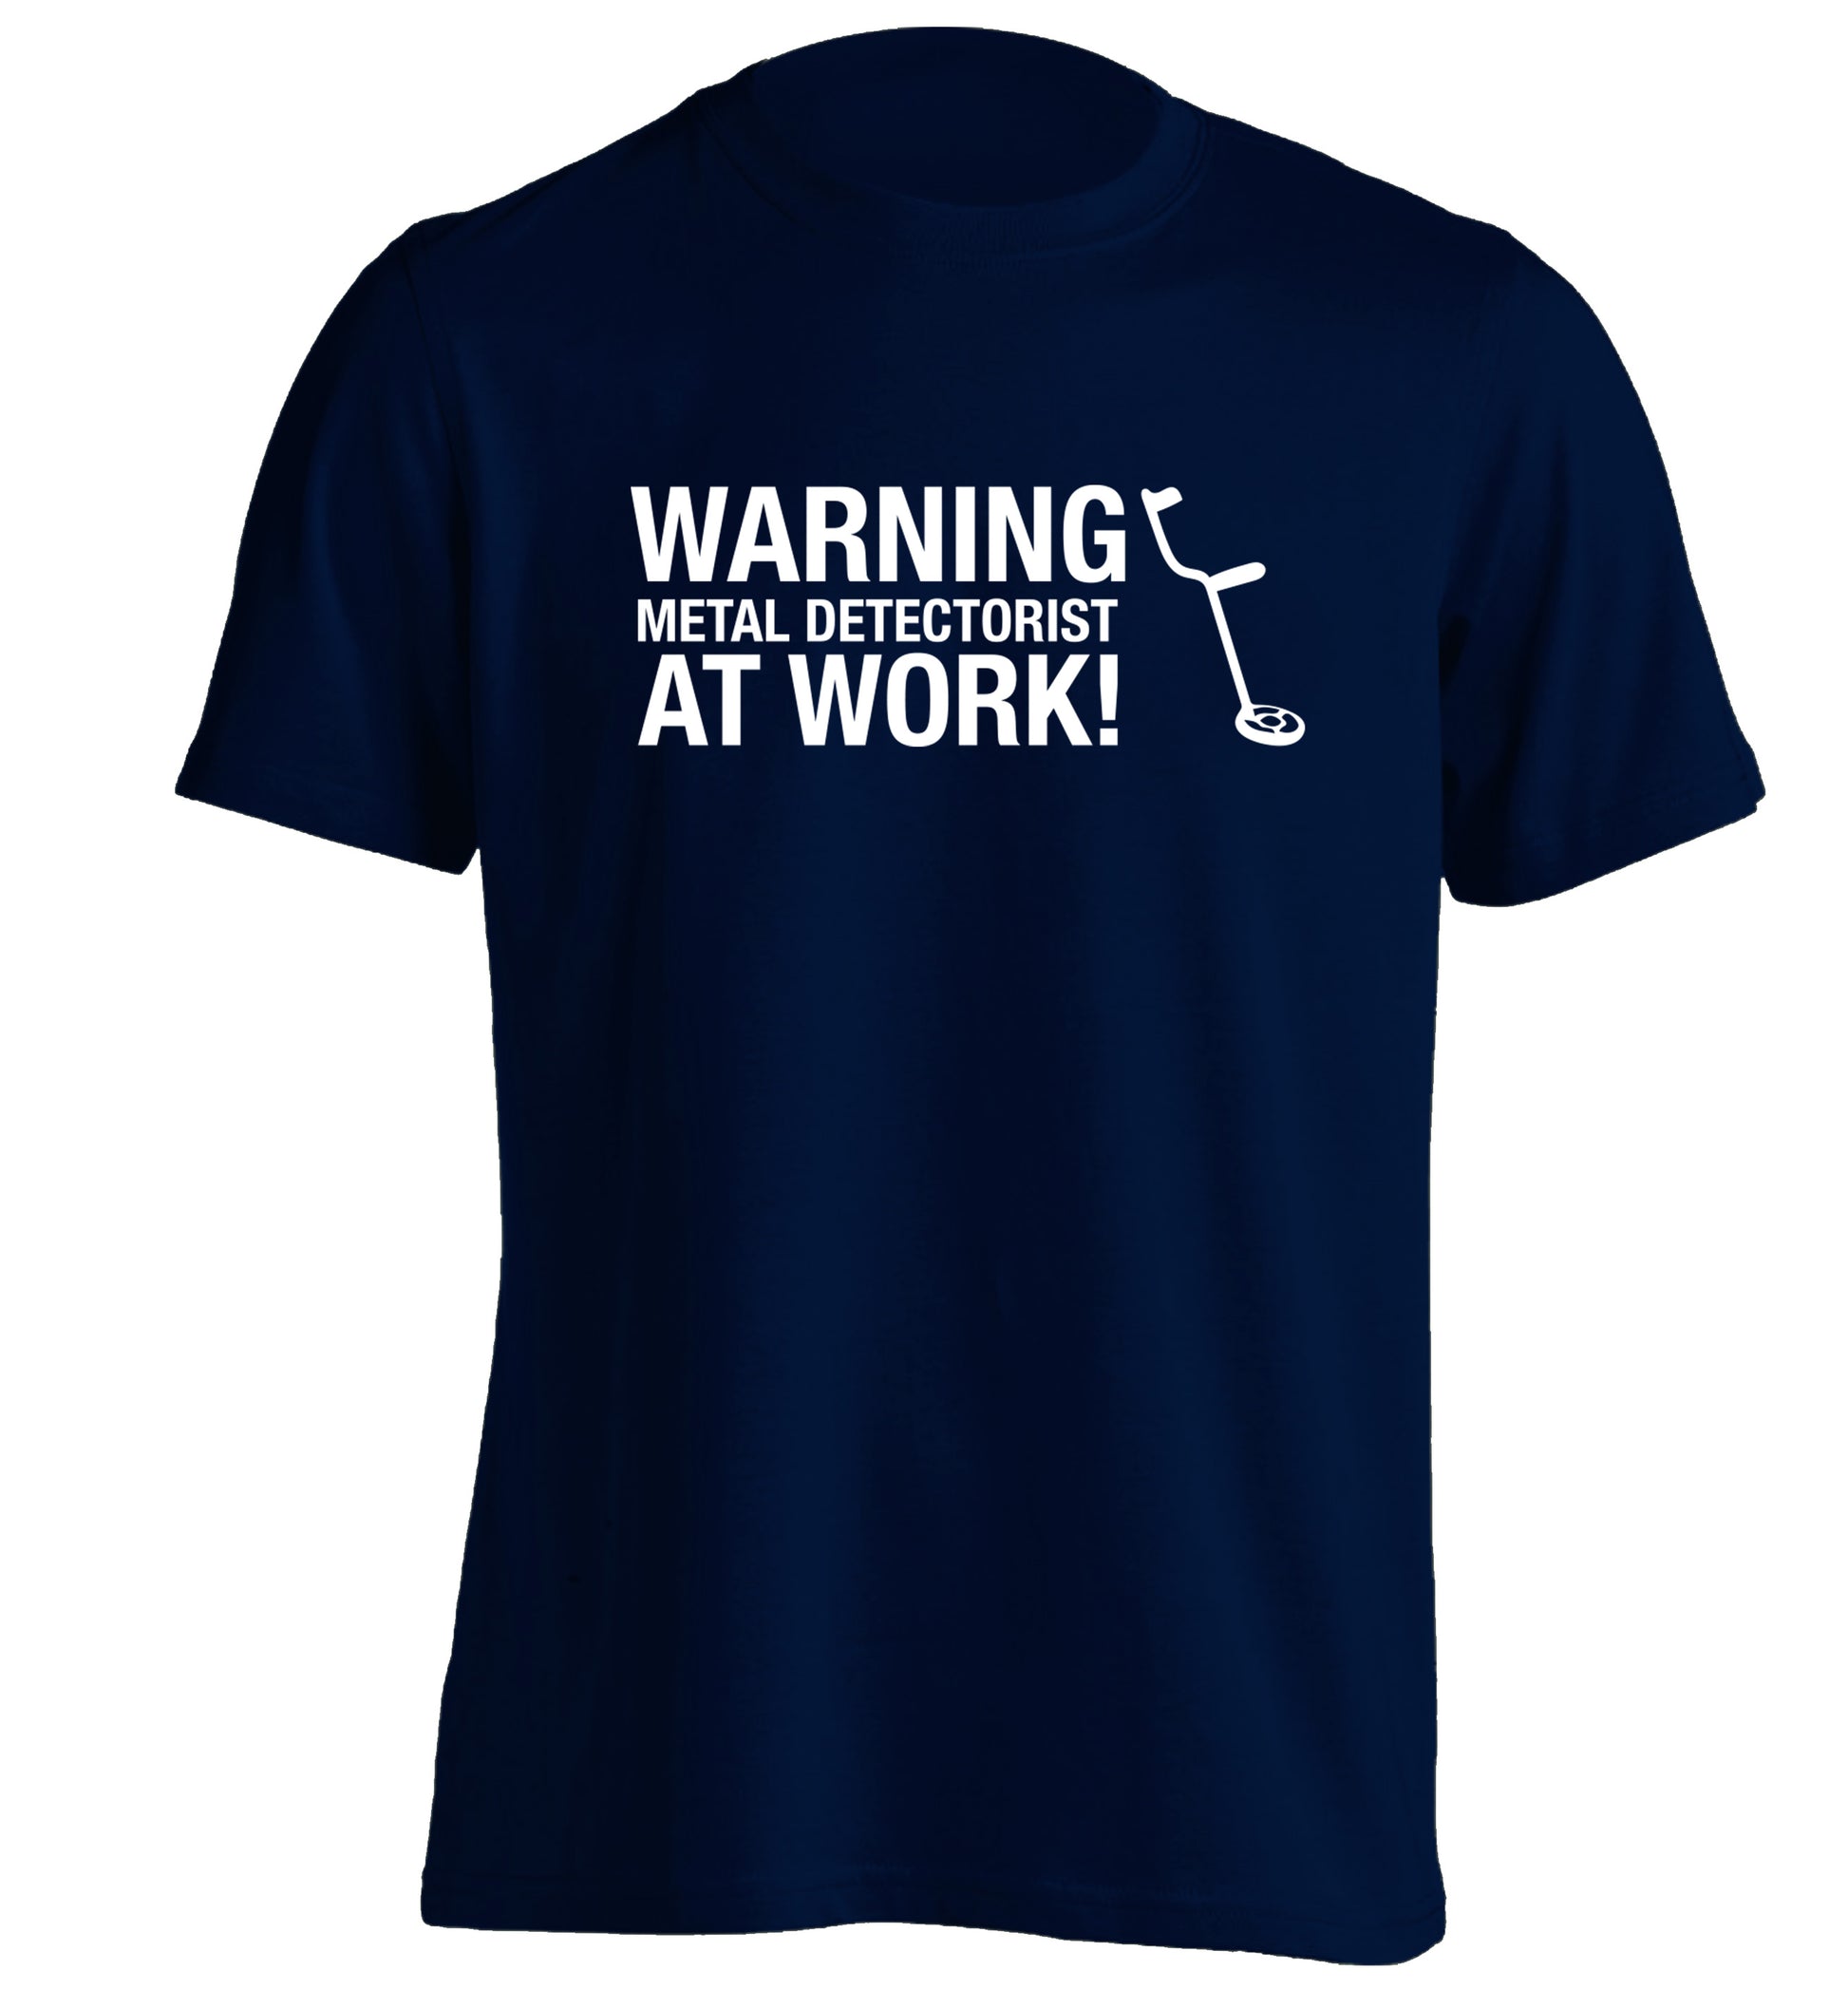 Warning metal detectorist at work! adults unisex navy Tshirt 2XL